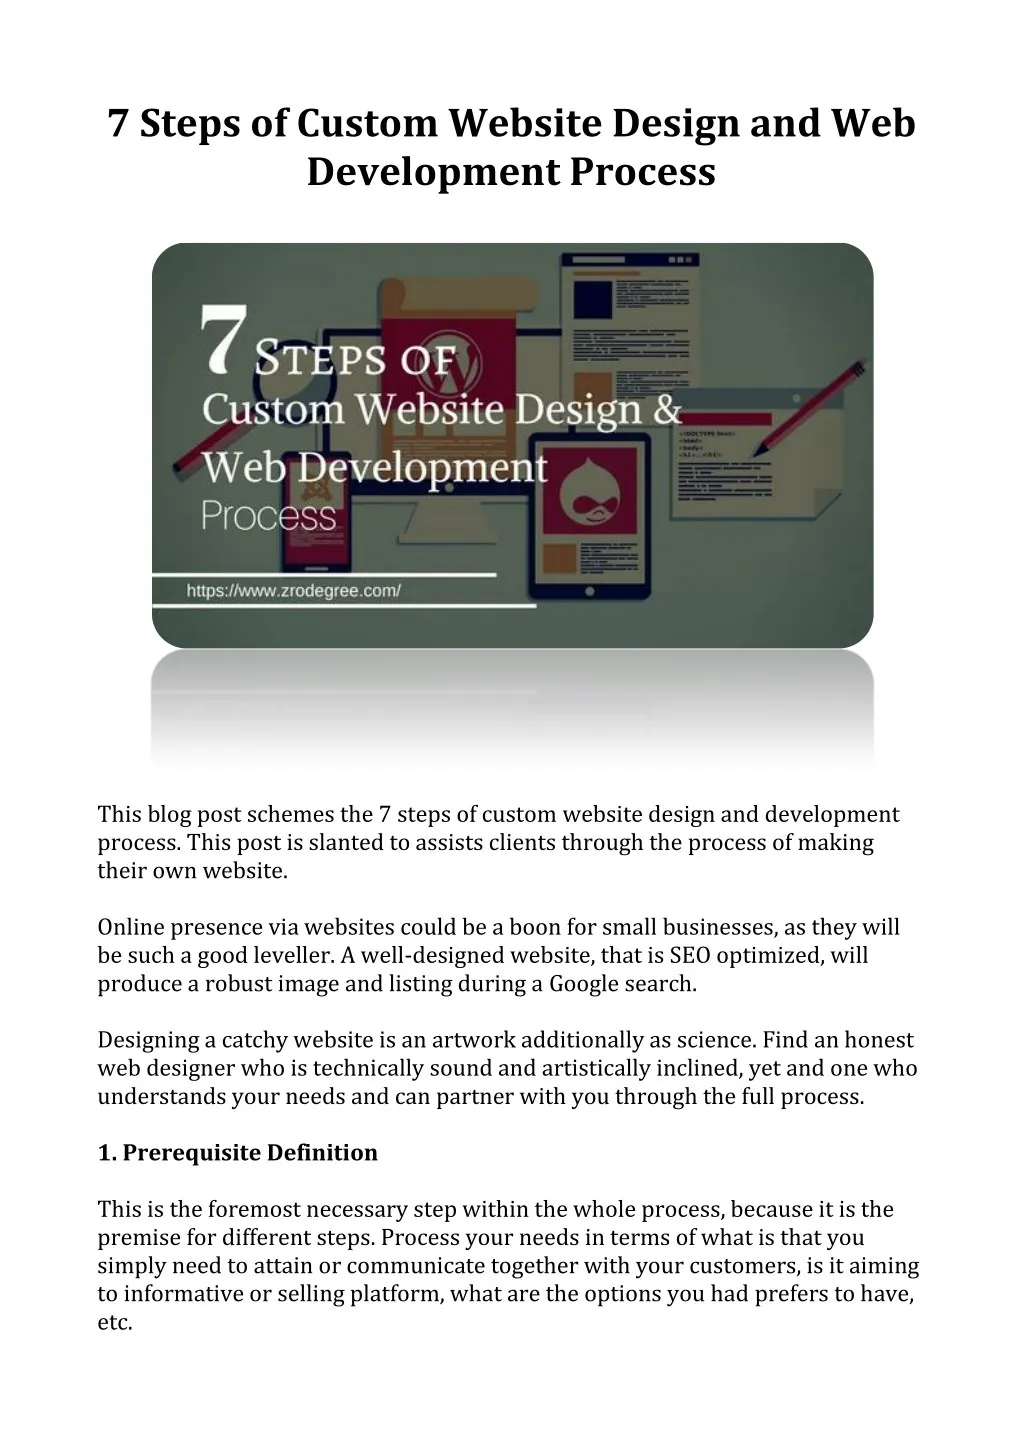 7 steps of custom website design